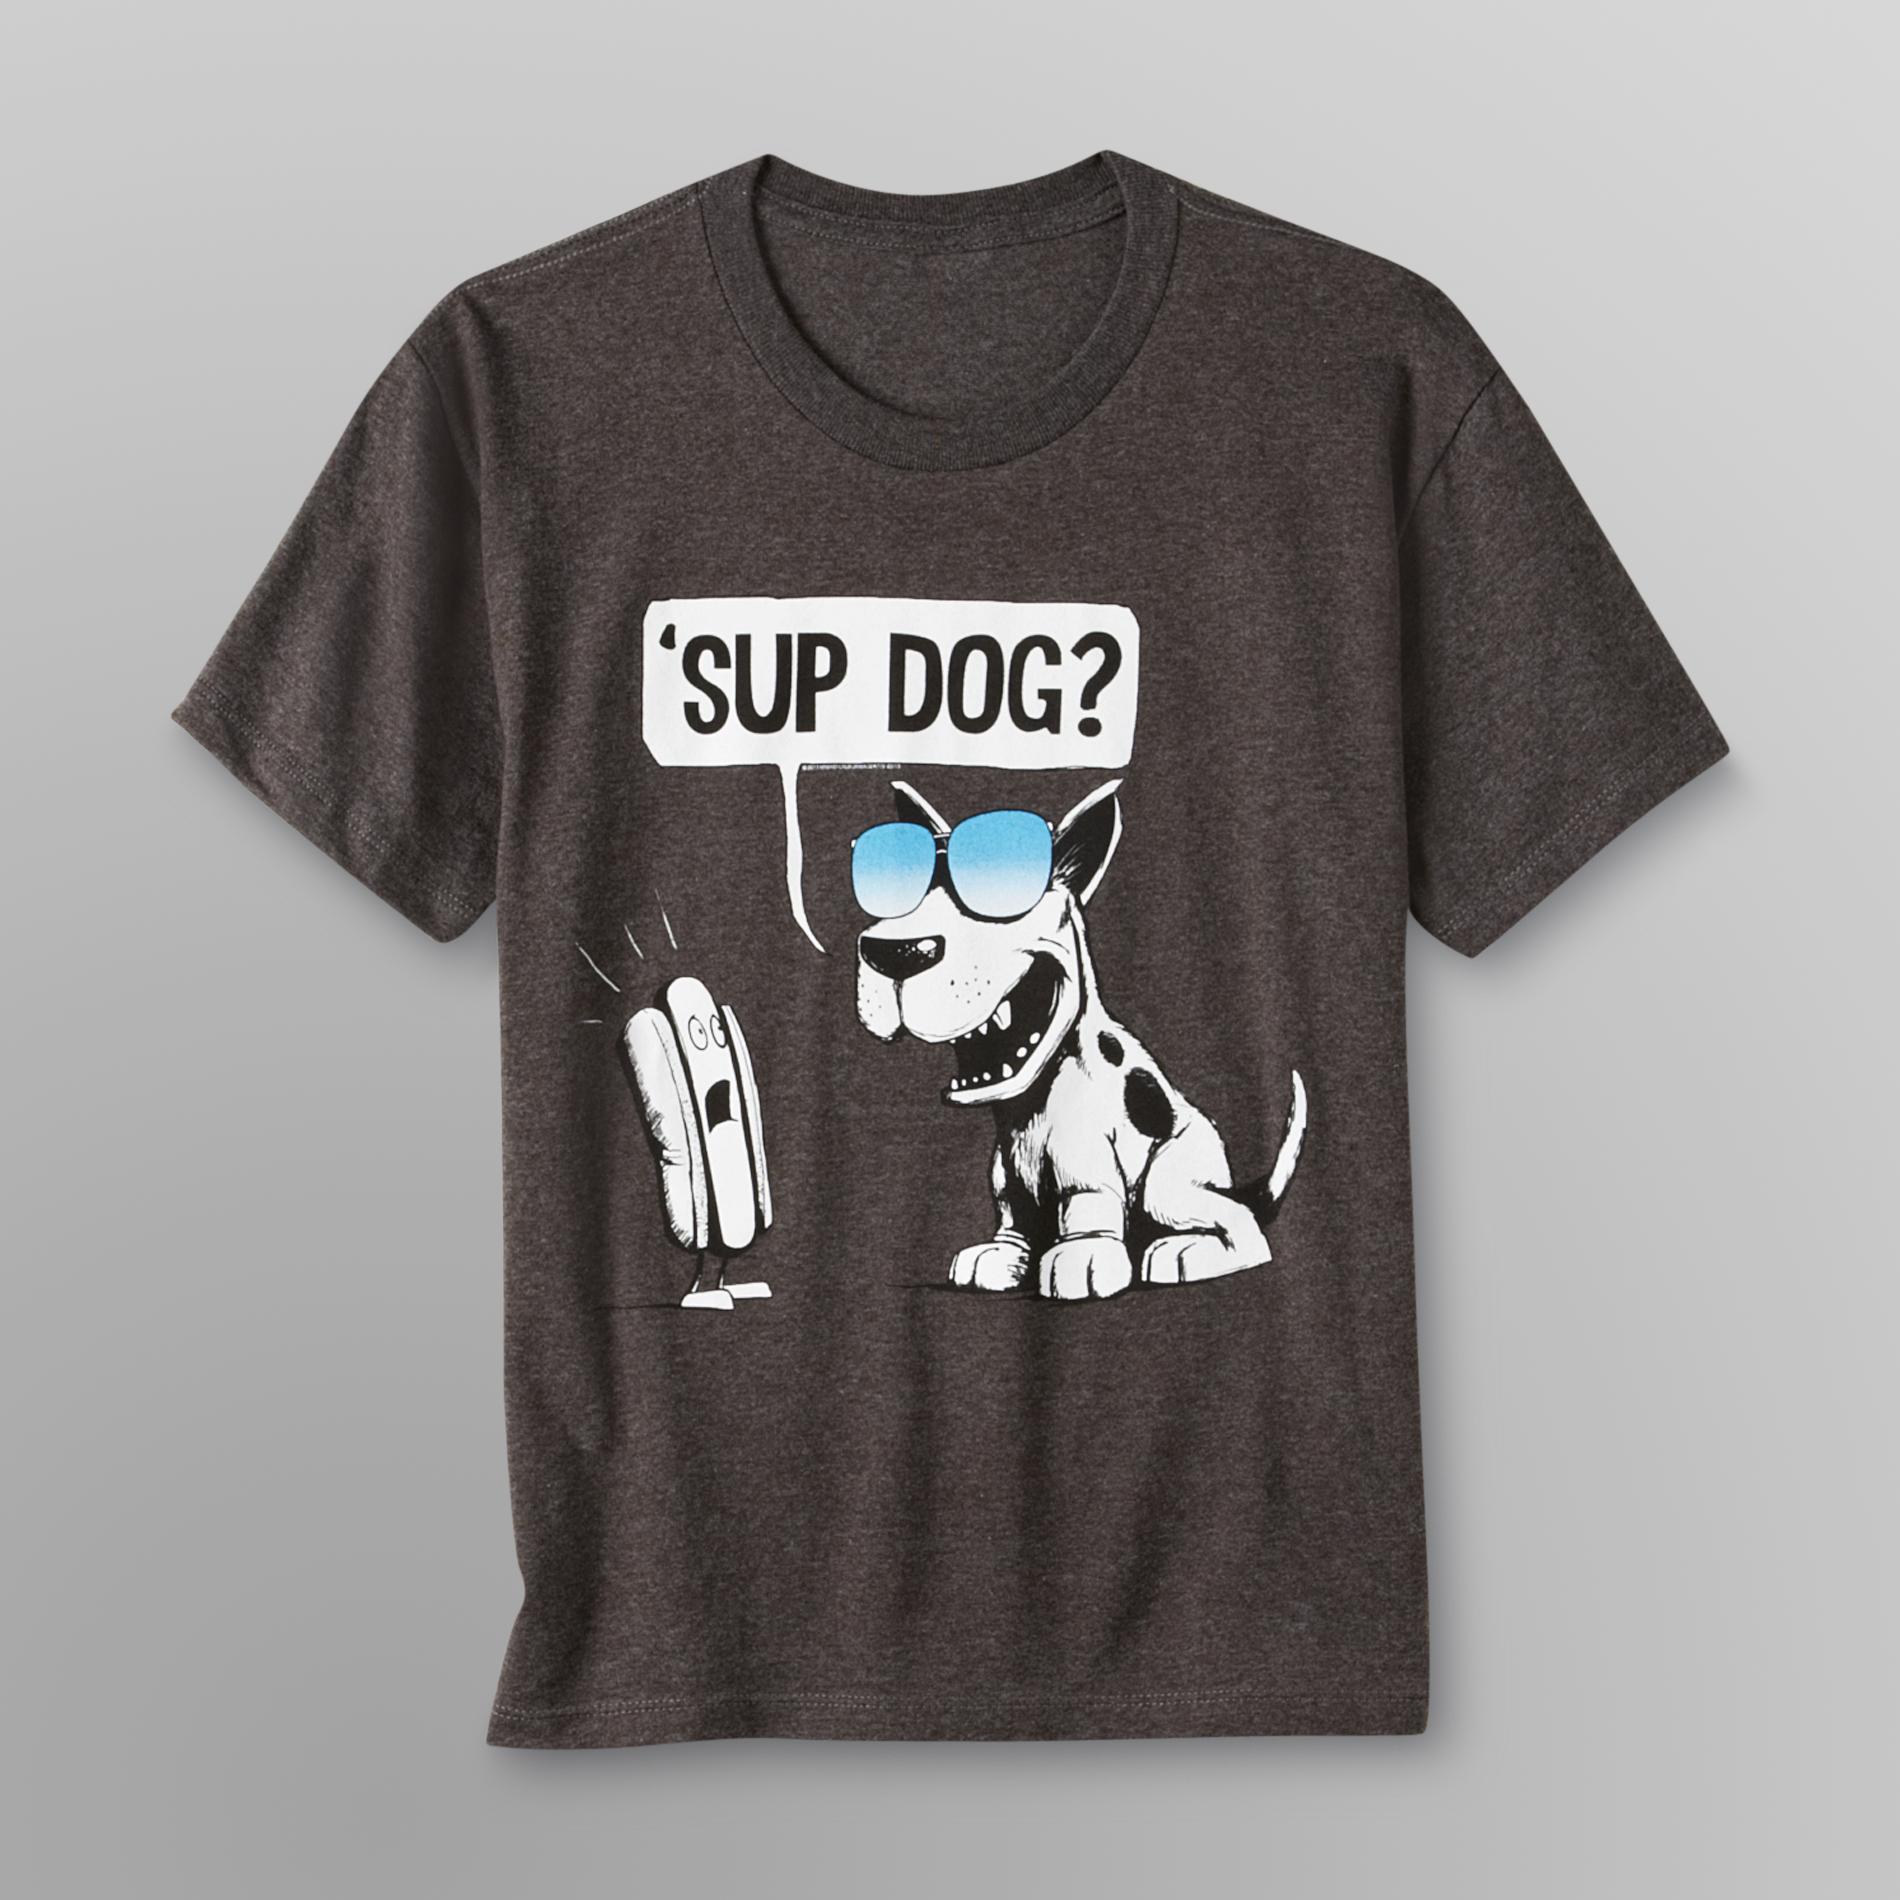 Hybrid Boy's Graphic T-Shirt - 'Sup Dog?